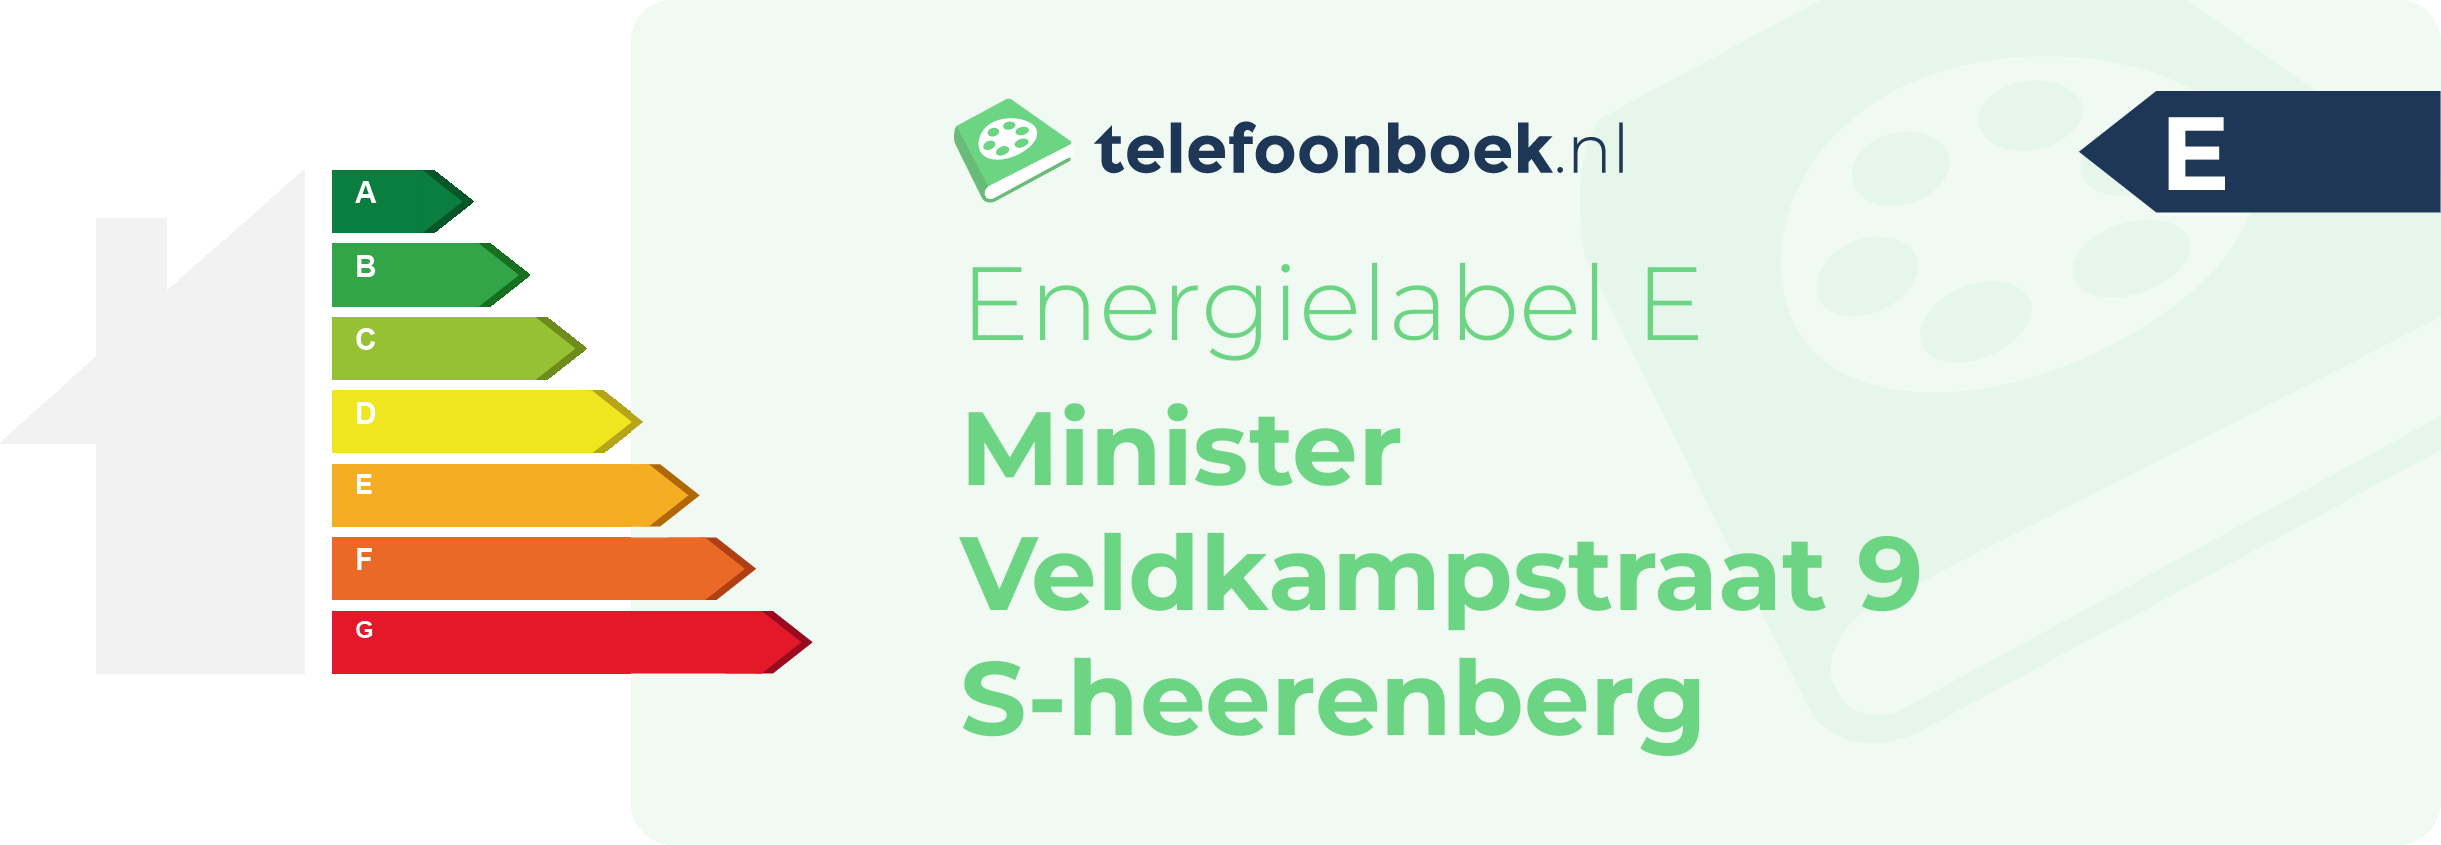 Energielabel Minister Veldkampstraat 9 S-Heerenberg